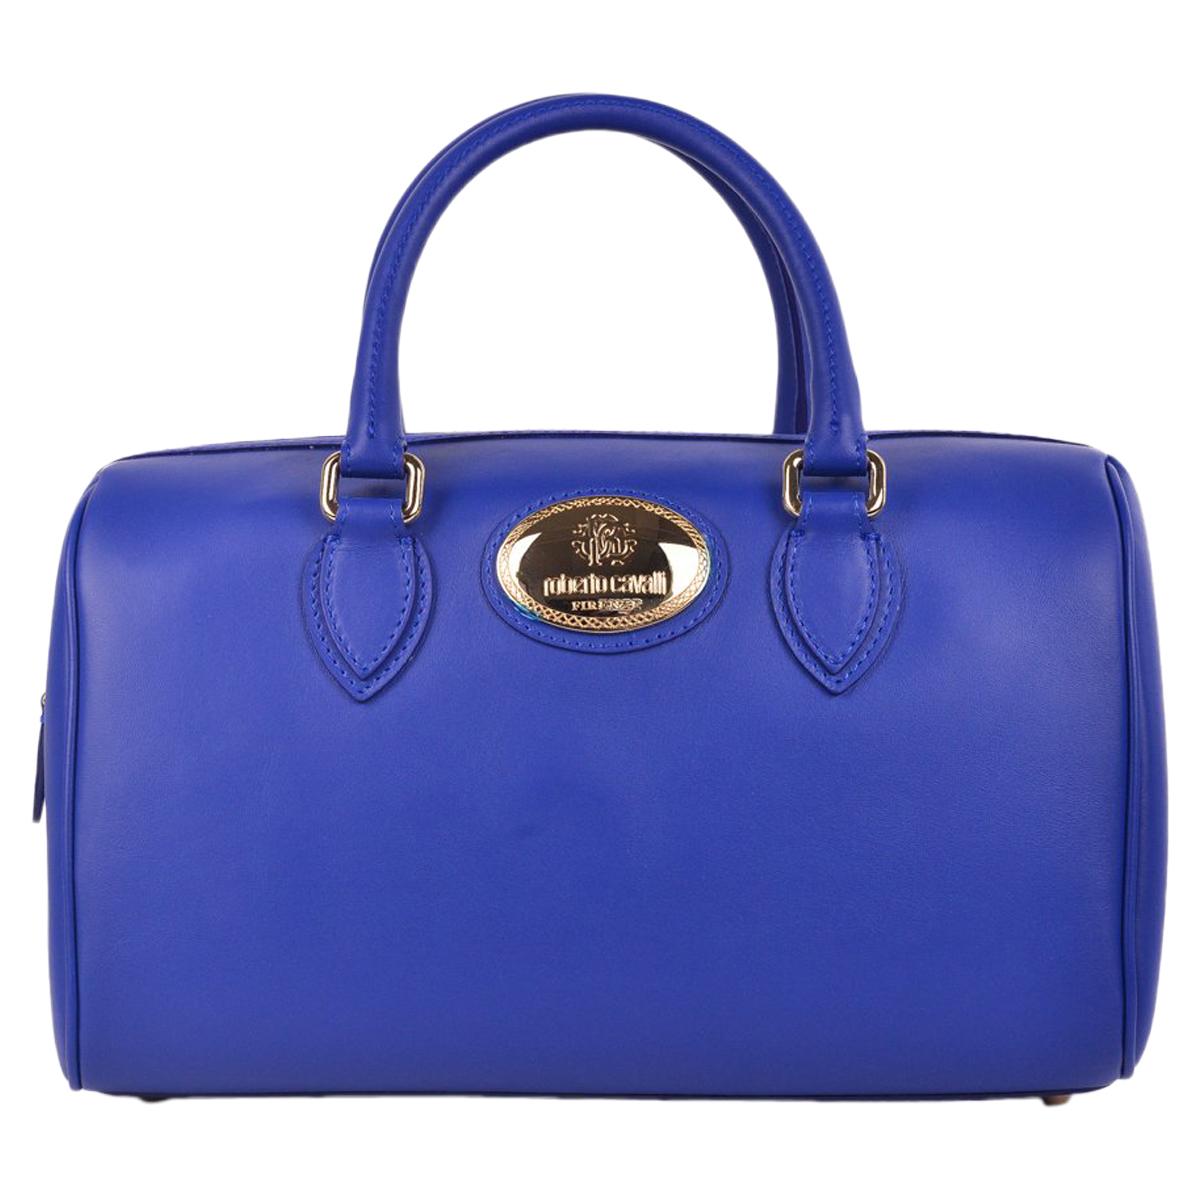 Roberto Cavalli Women's Firenze Blue Leather Duffle Satchel Bag For Sale